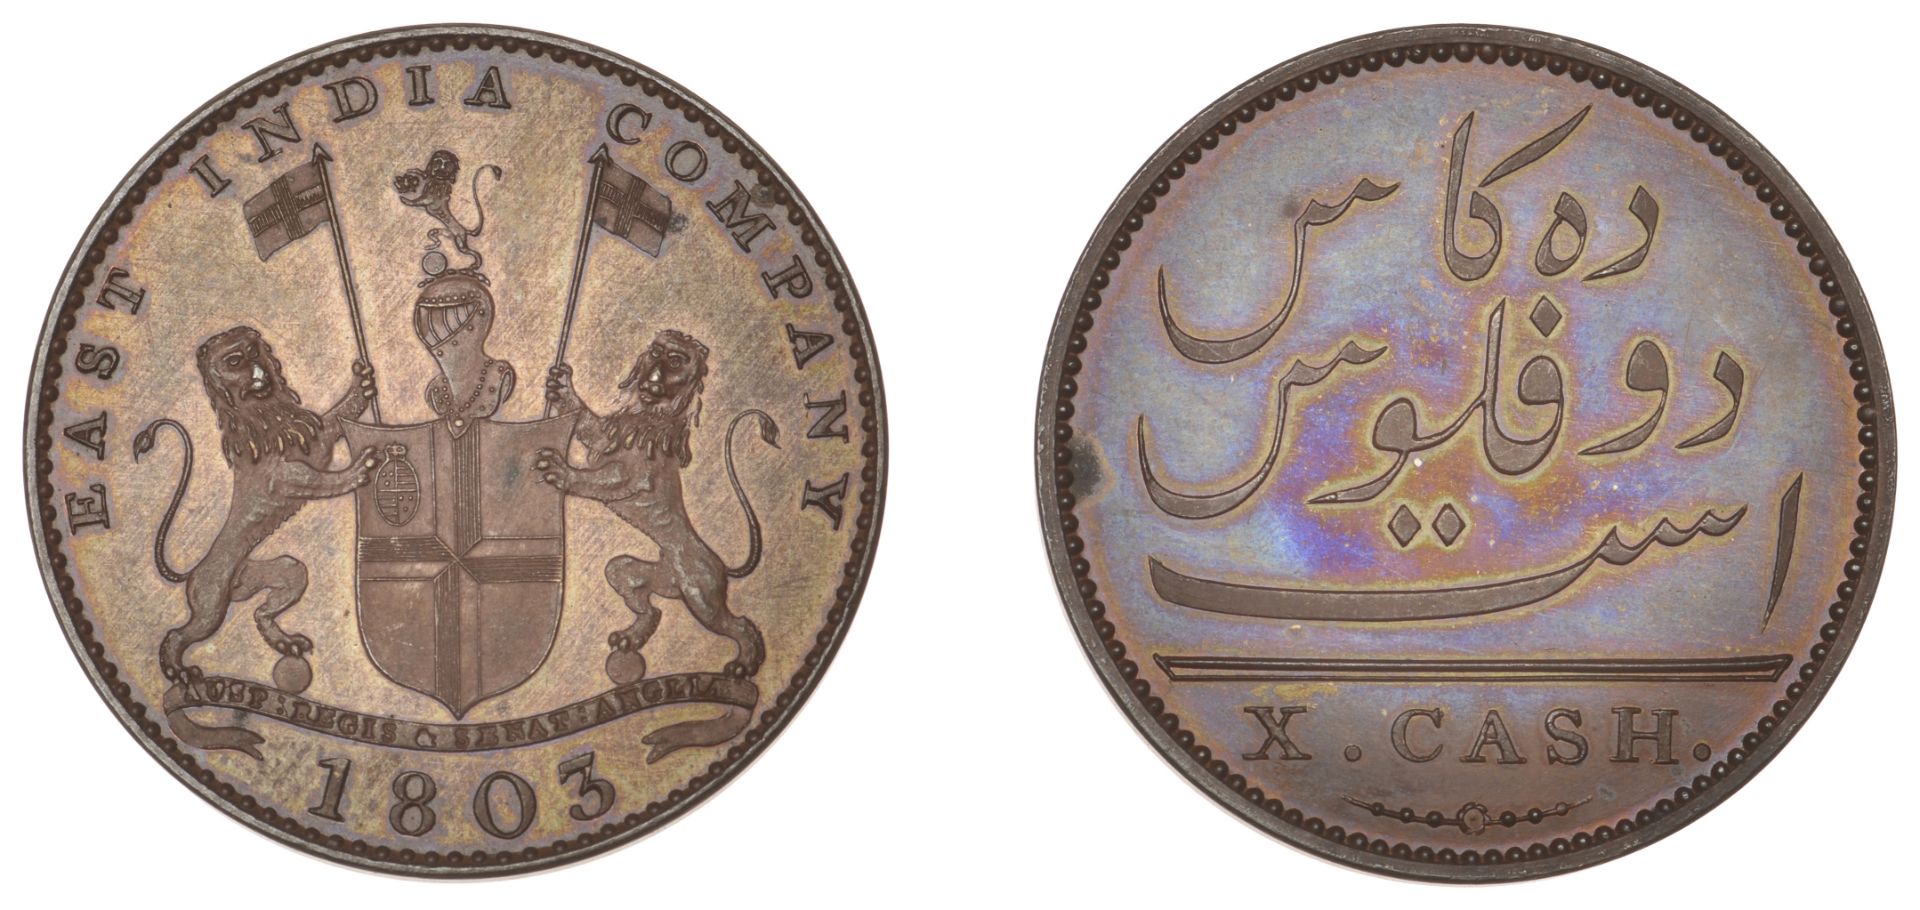 East India Company, Madras Presidency, European Minting, 1803-8, Soho, bronzed-copper Proof...